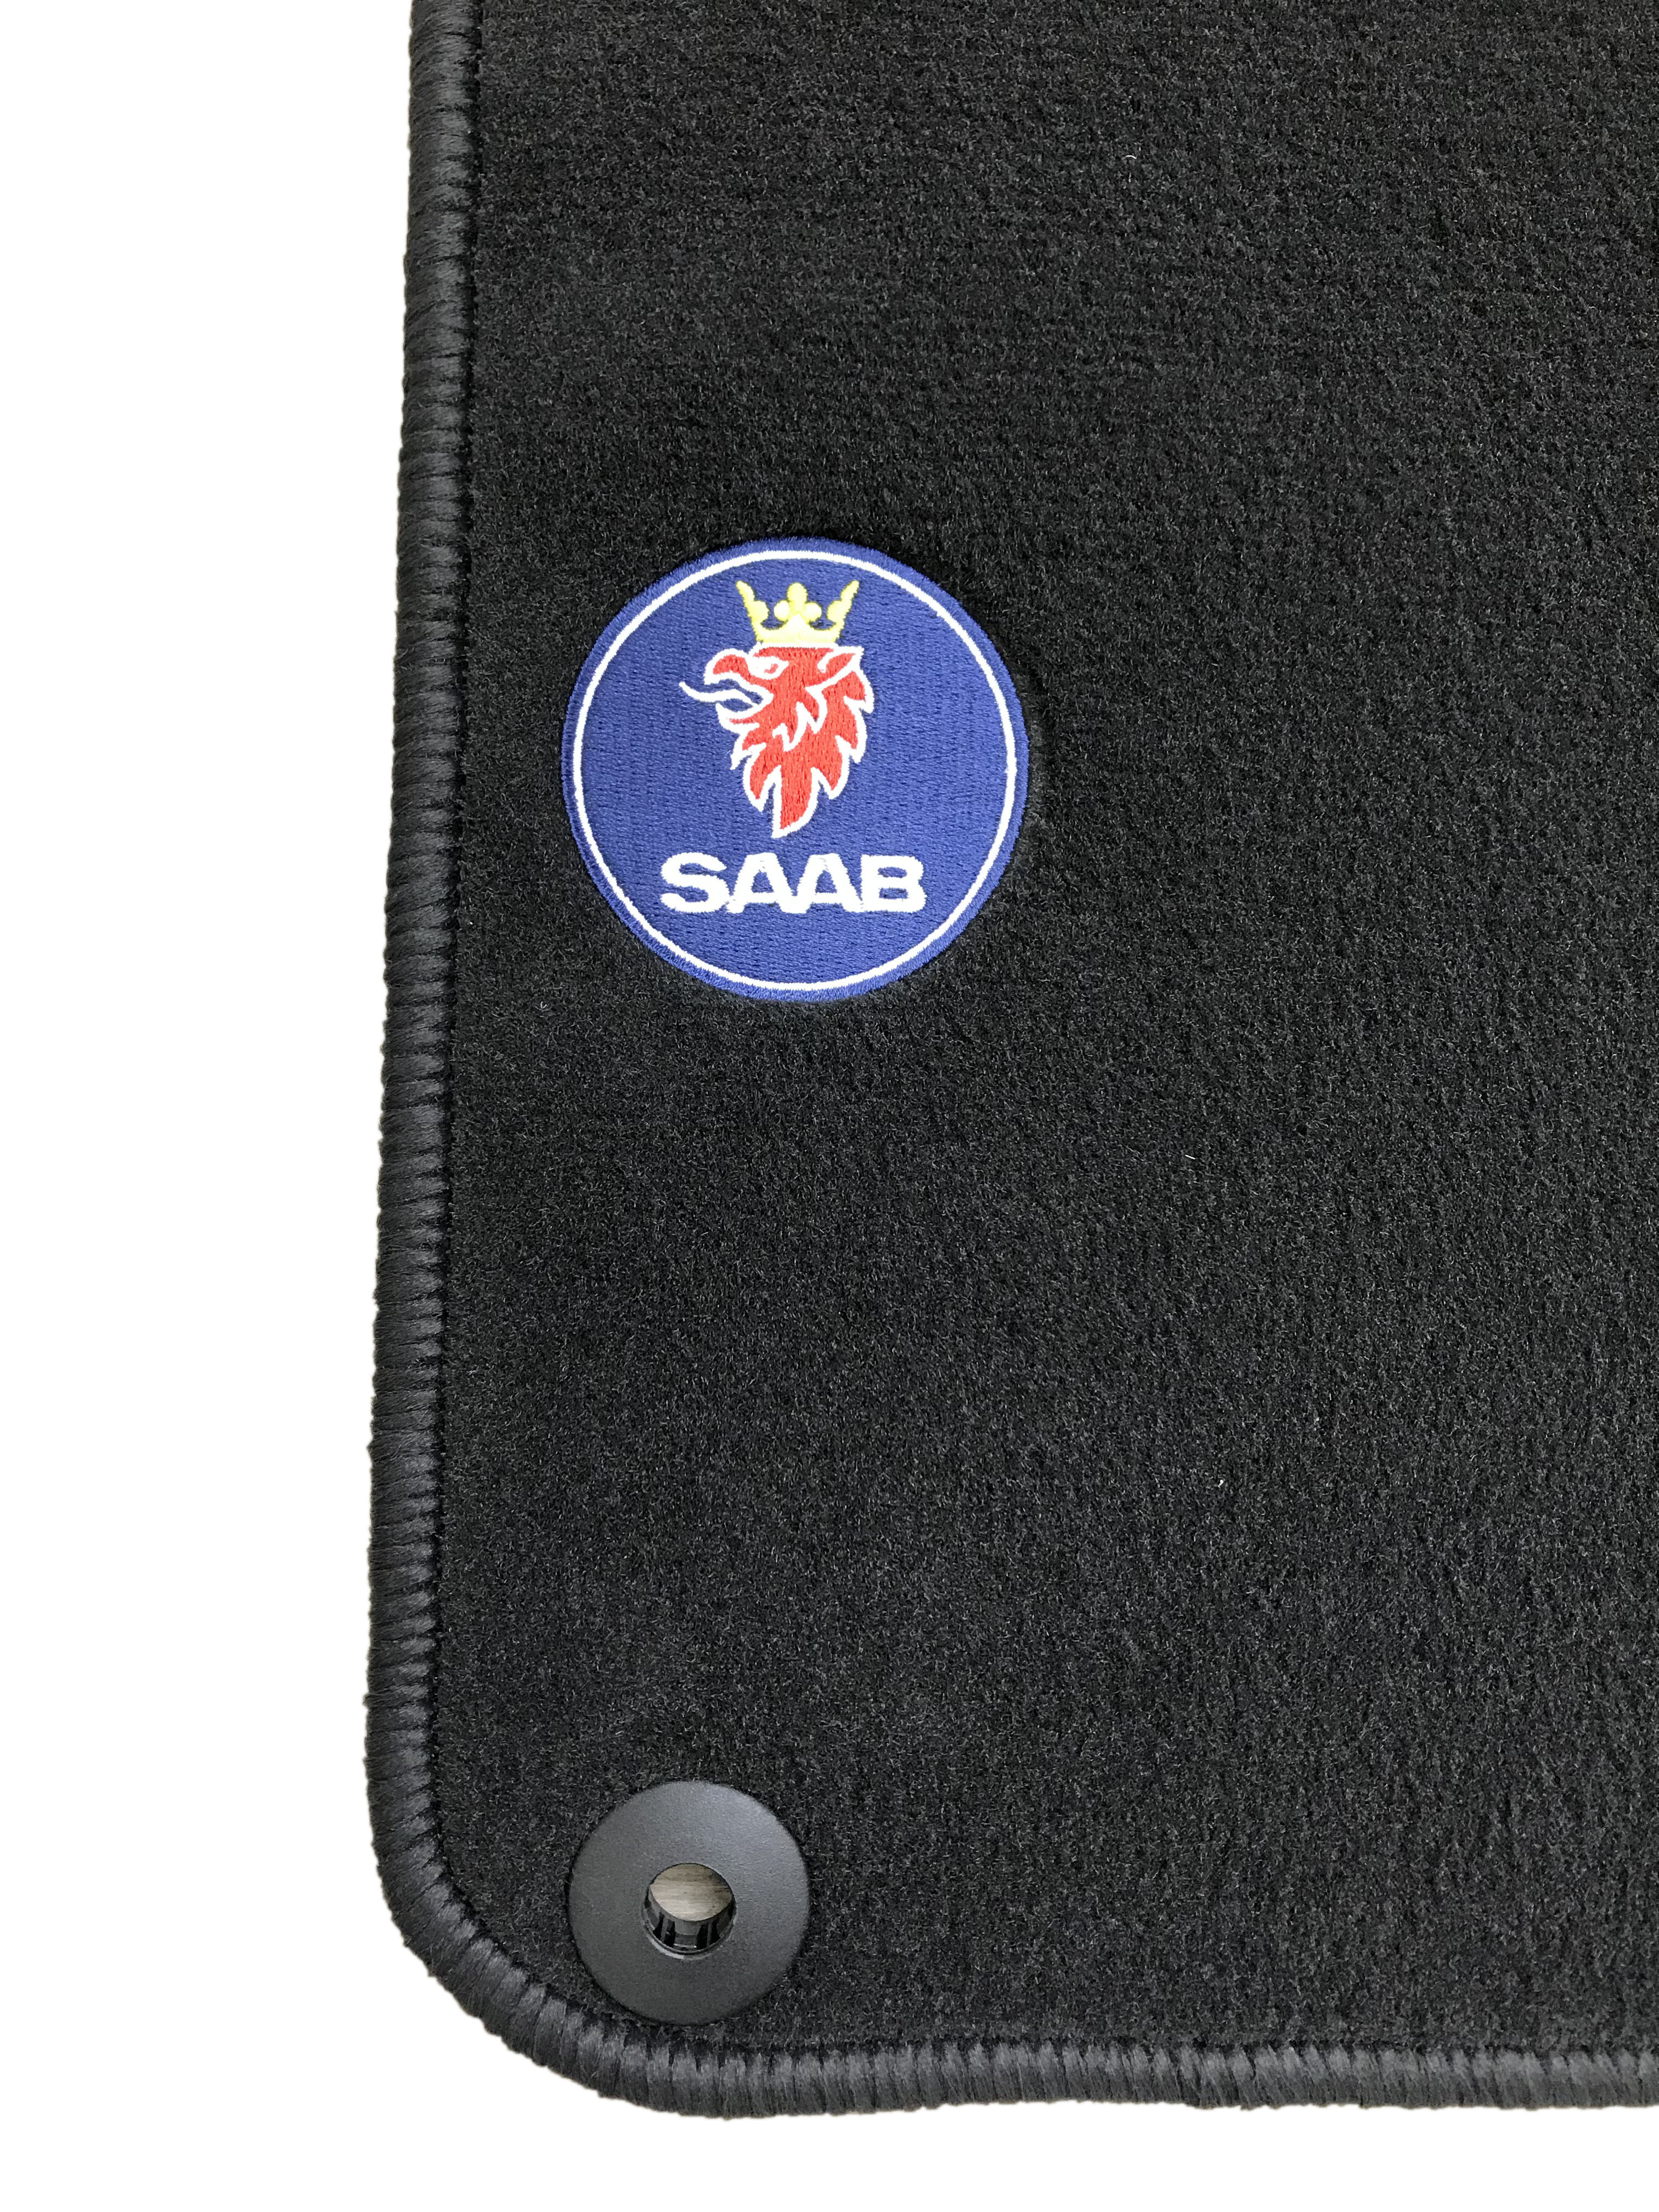 Saab 9.3 automat met logo '04 - '08 (mattenset van 4 stuks)